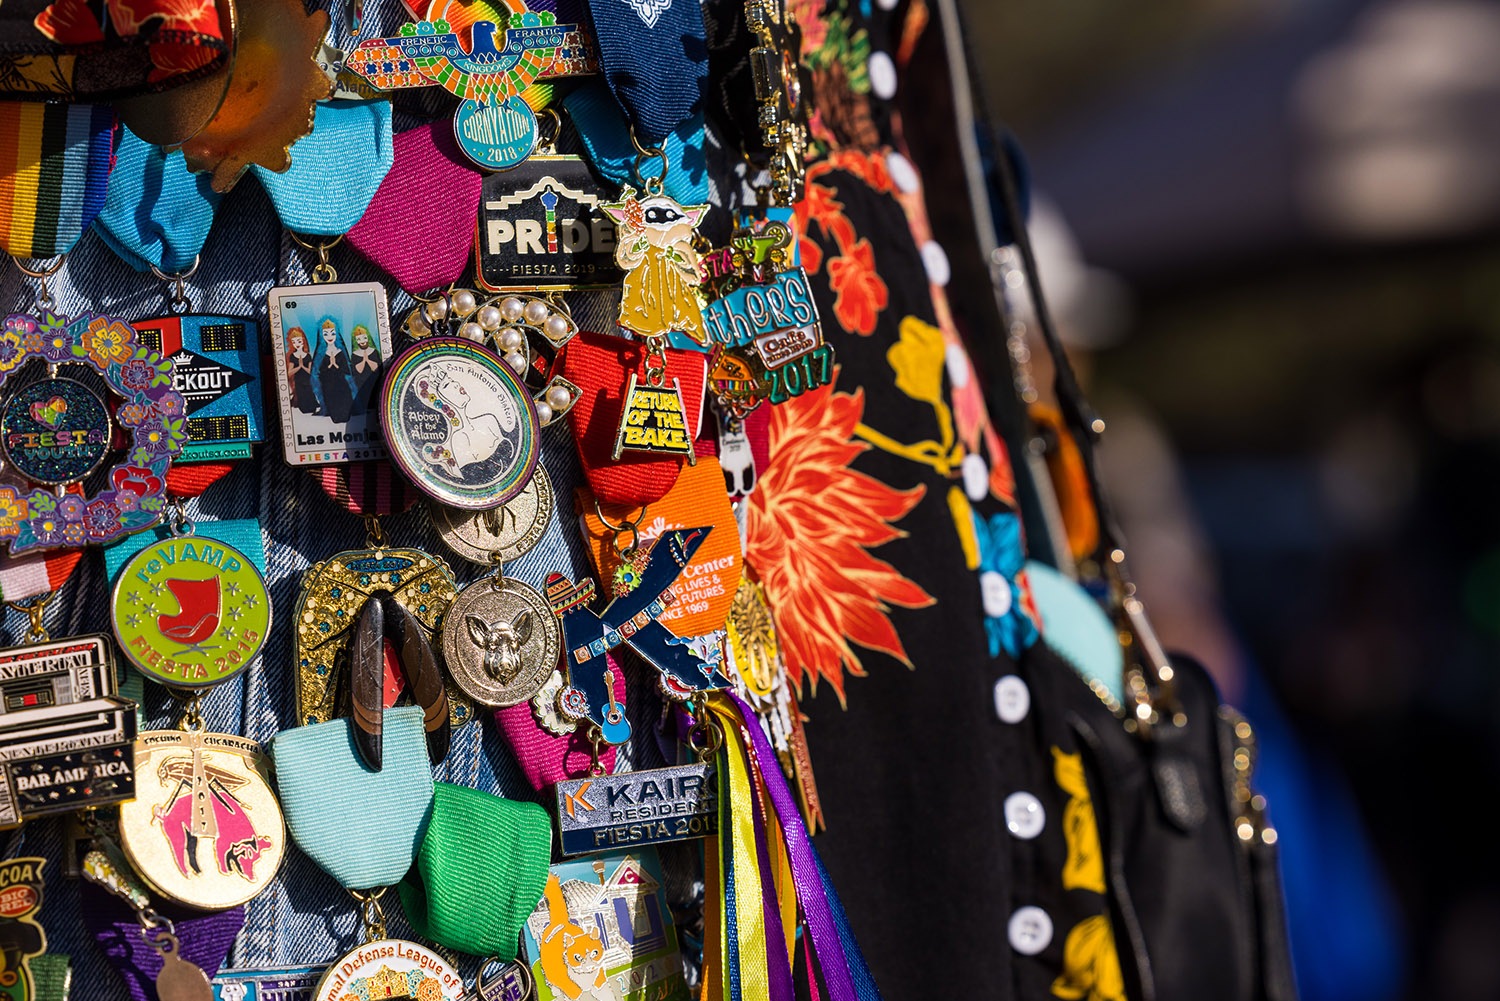 Fiesta medal sash at Fiesta Fiesta at Hemisfair, San Antonio, TX, on Thursday, March 31, 2022. Photo by Chris Stokes | Heron contributor